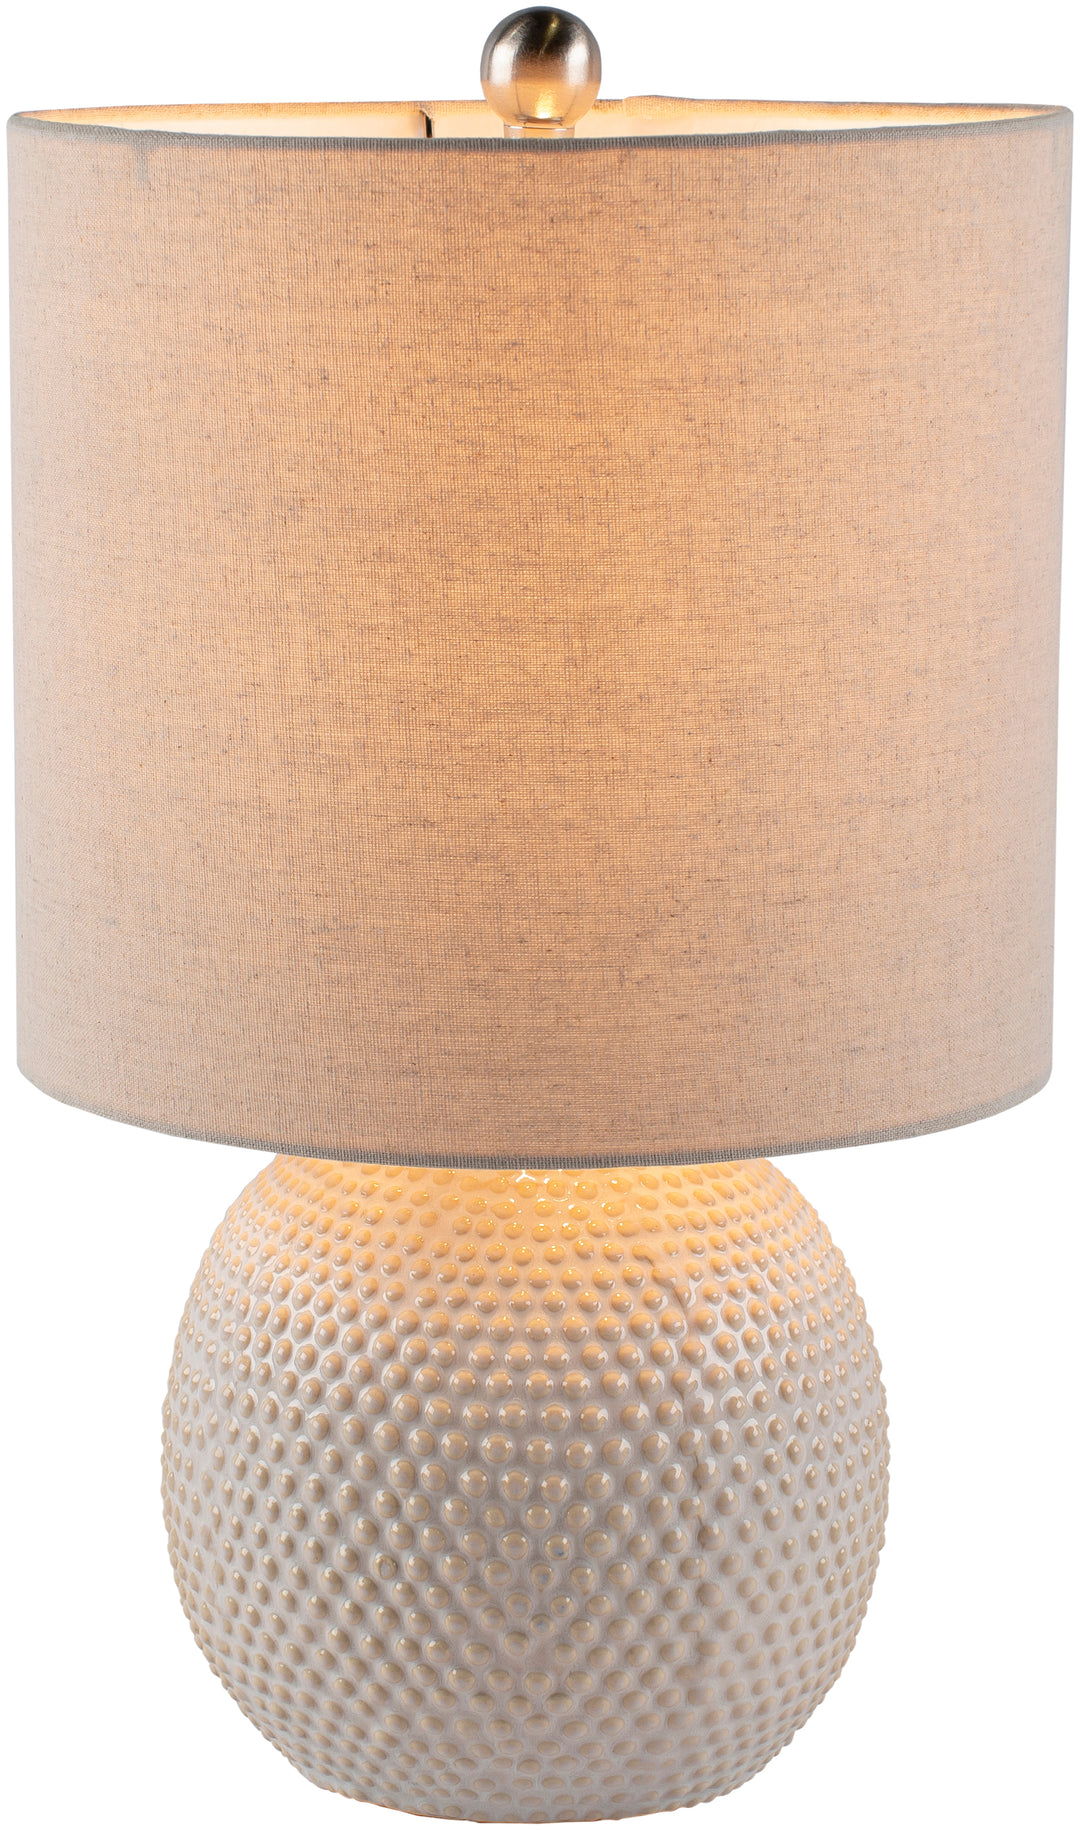 Clayton Table Lamp